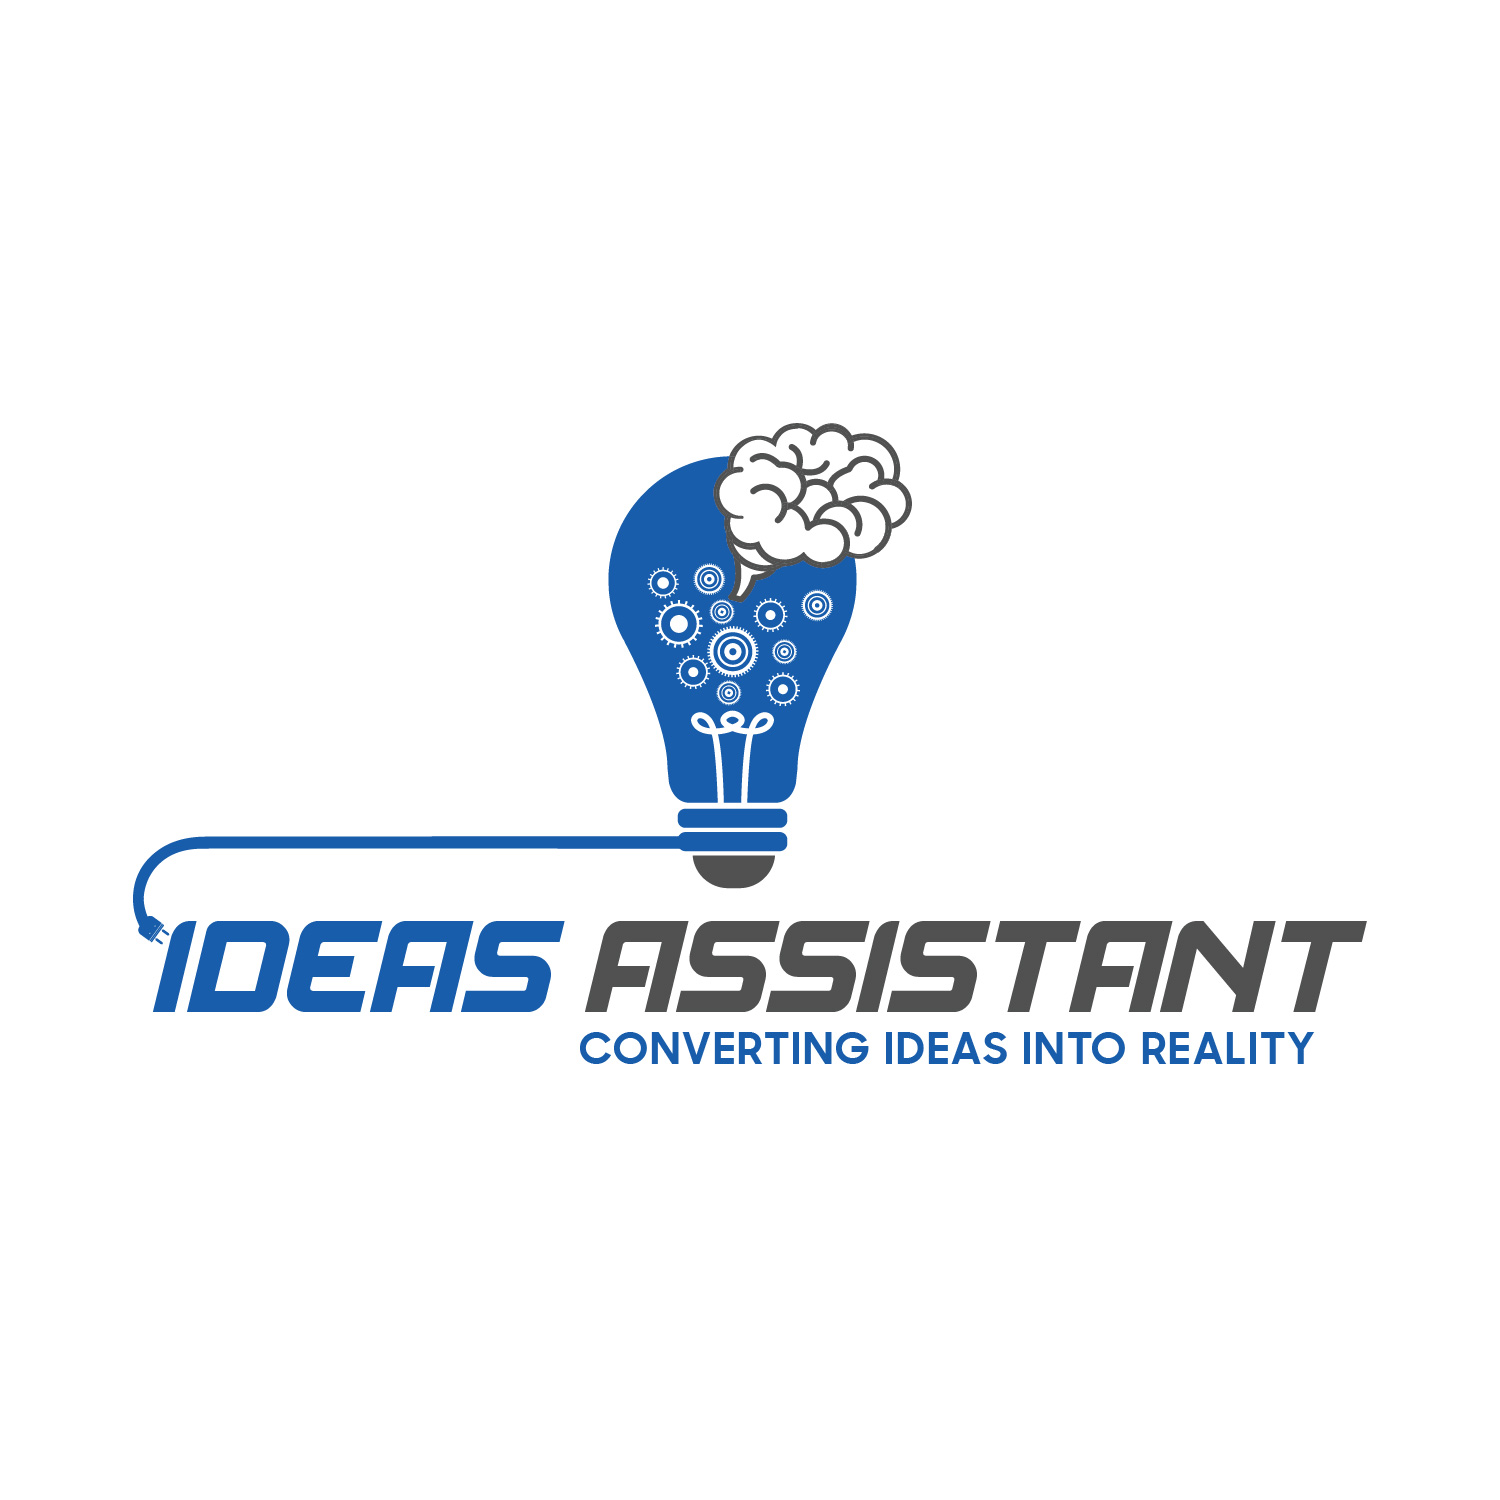 Ideas Assistant logo